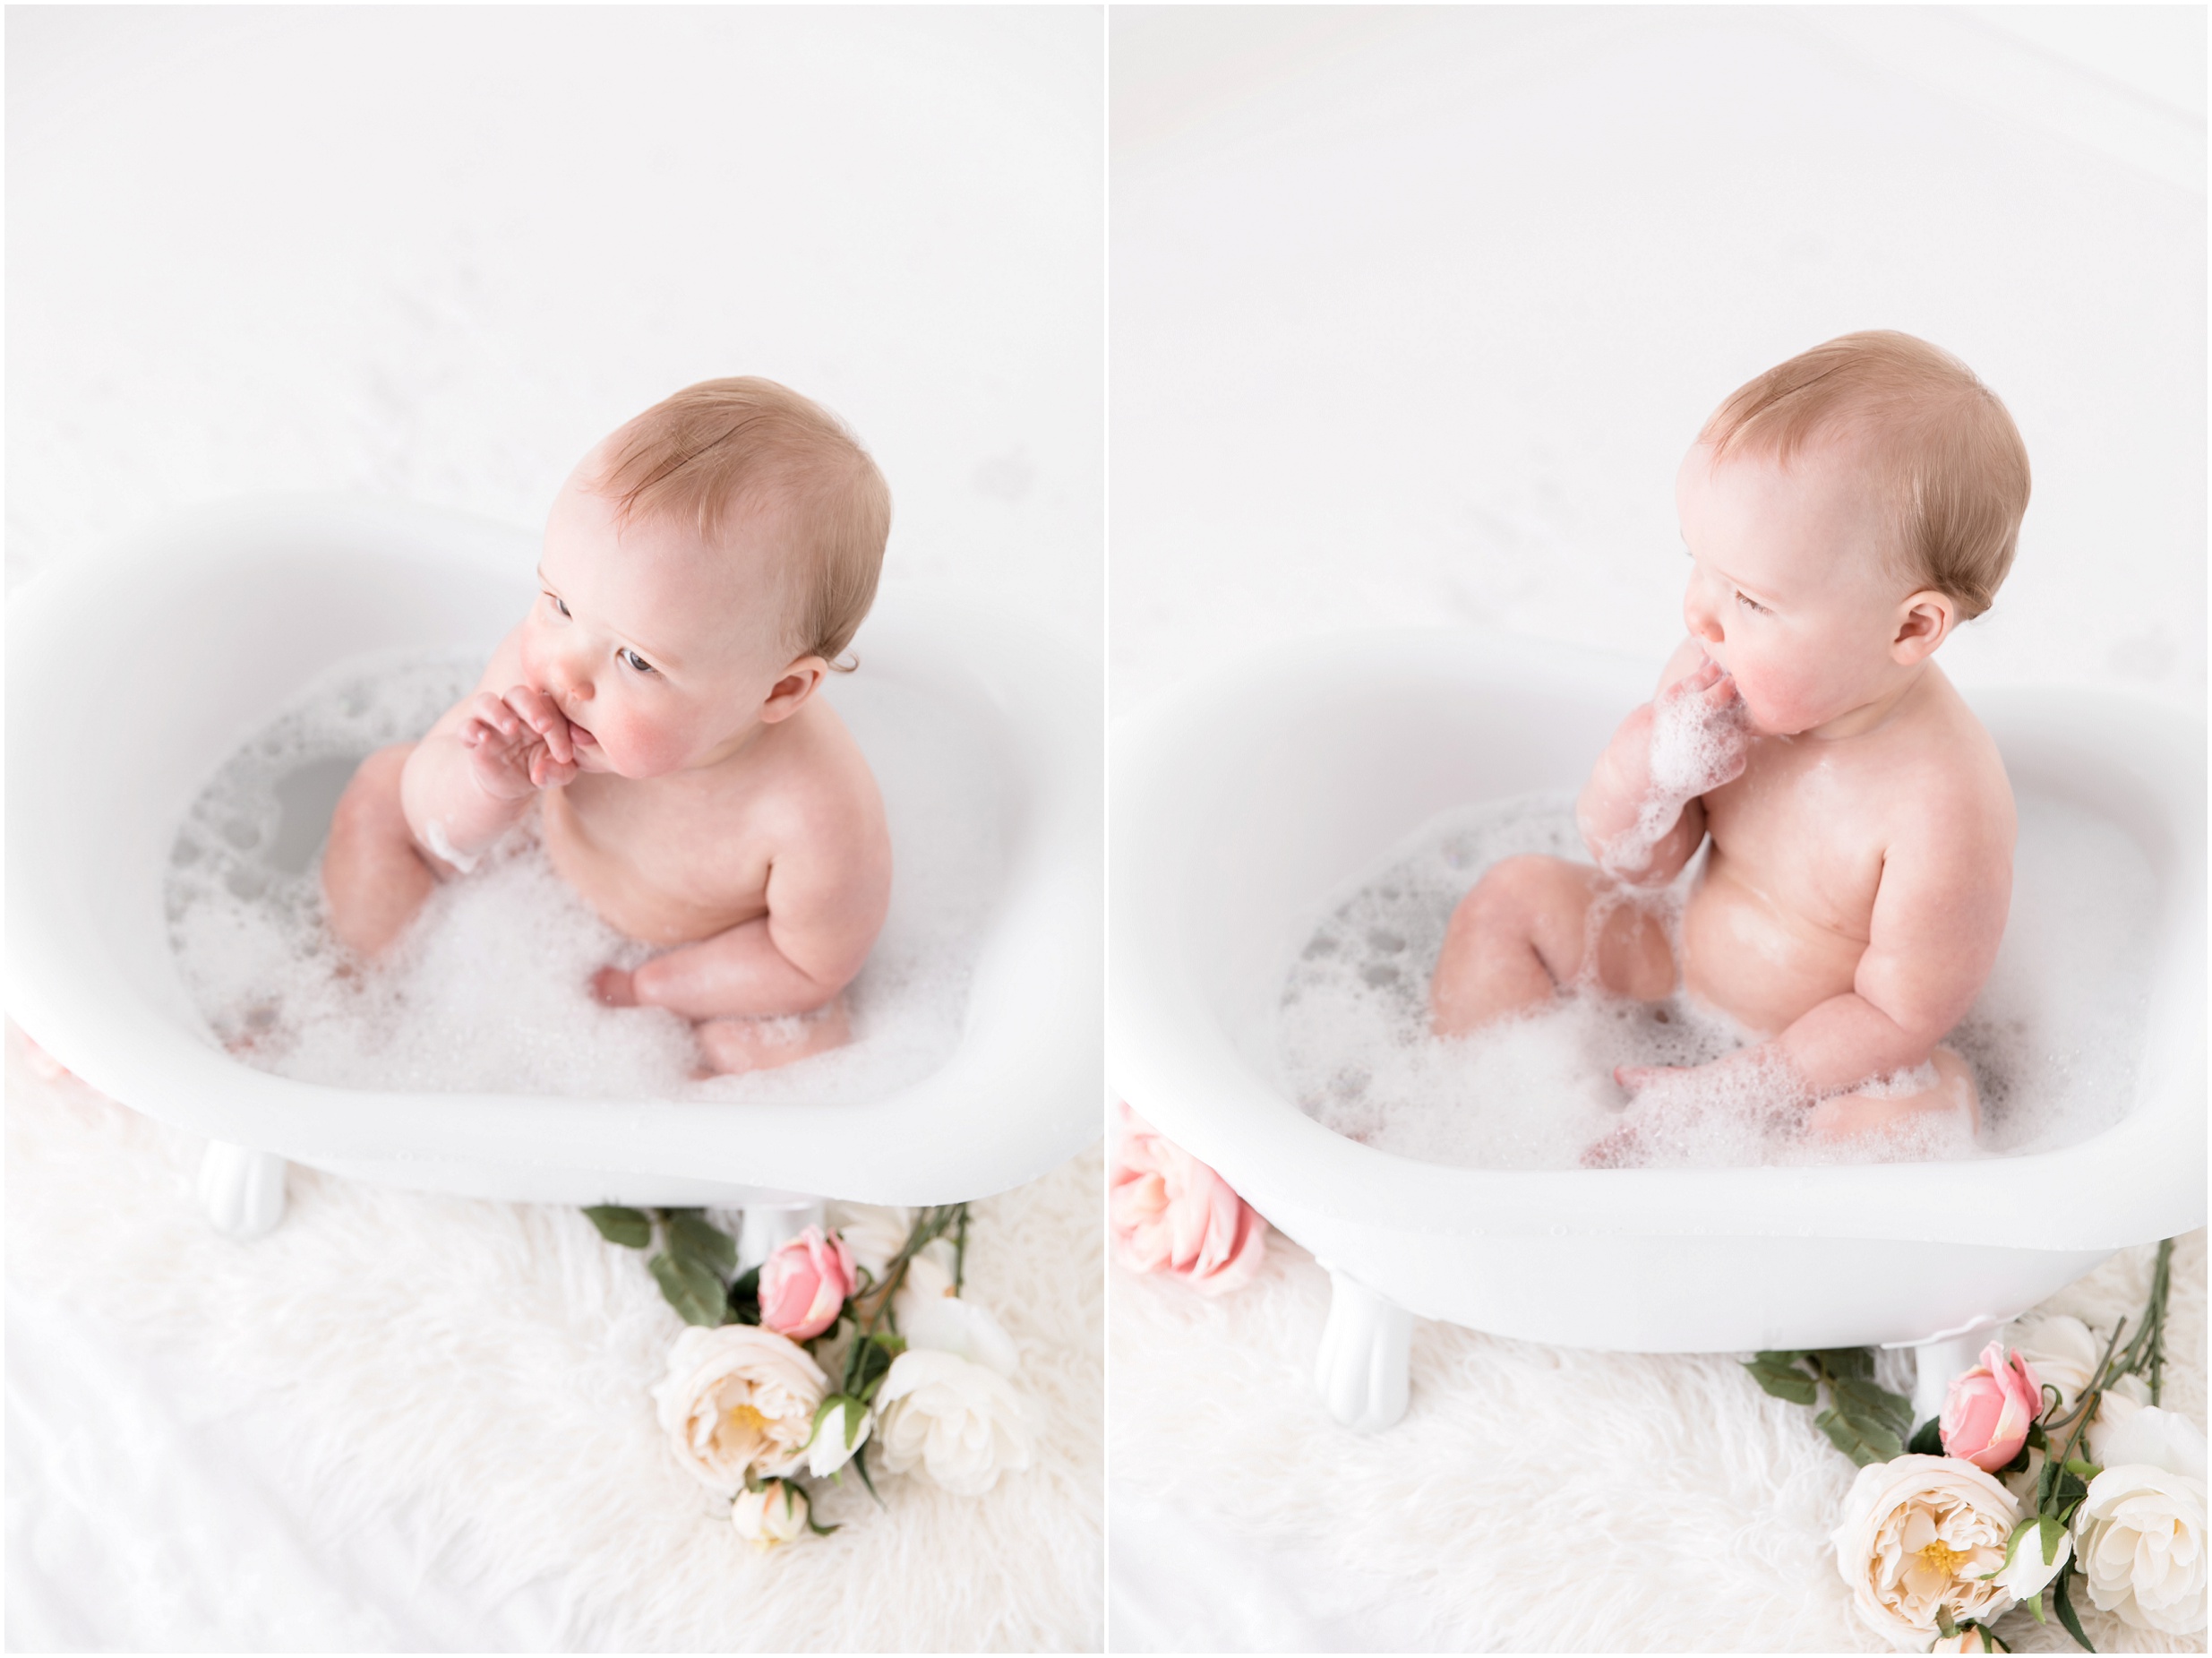 bubble bath photos, cake smash, edmonton family photographer, nc photography, first birthday photos, milk bath photos